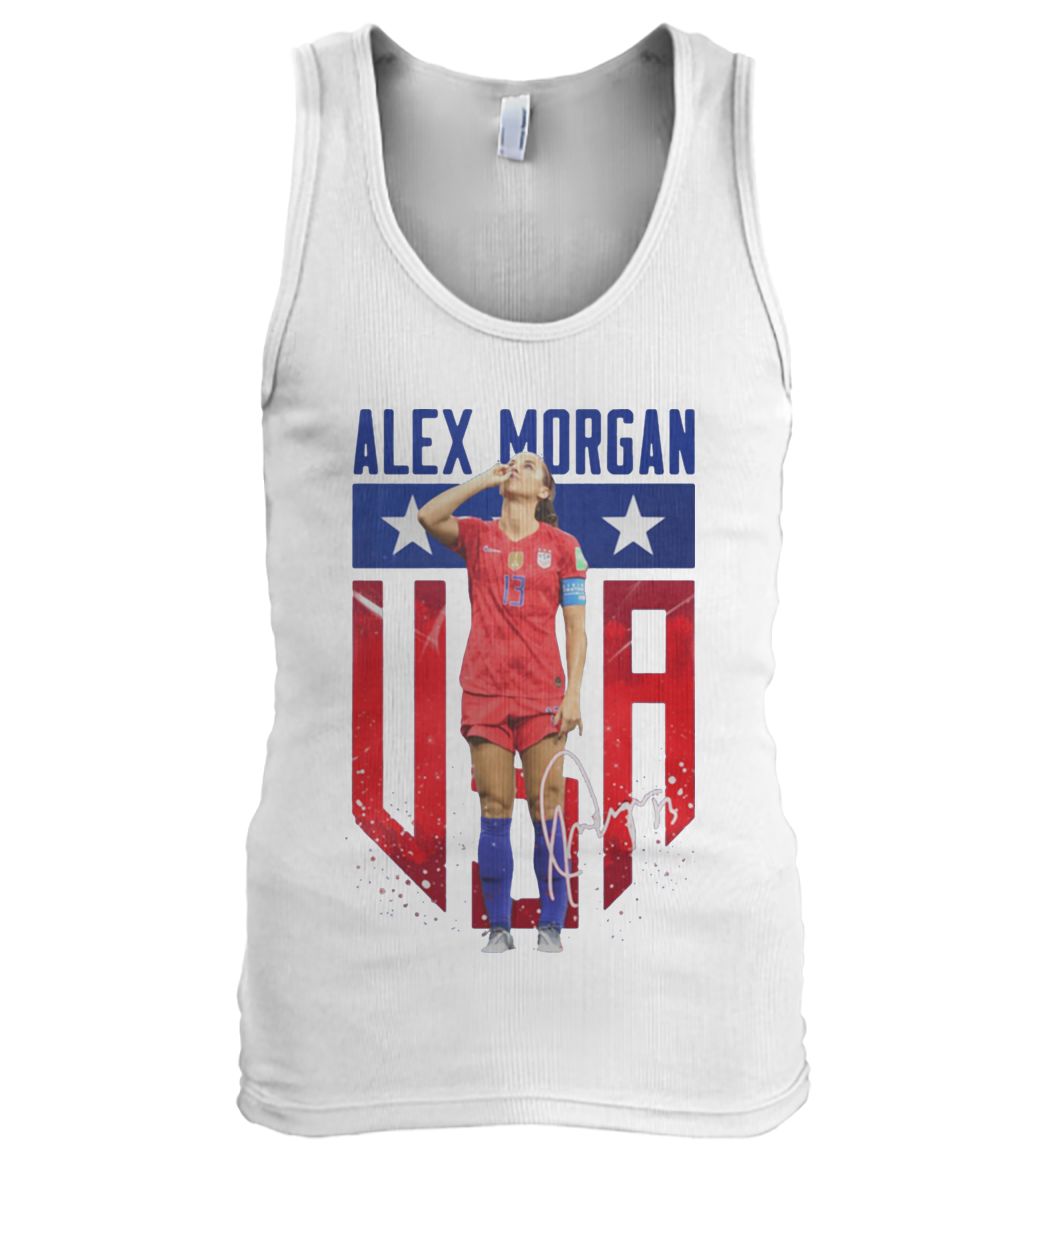 Alex morgan US women’s world cup trolling england iconic celebration men's tank top